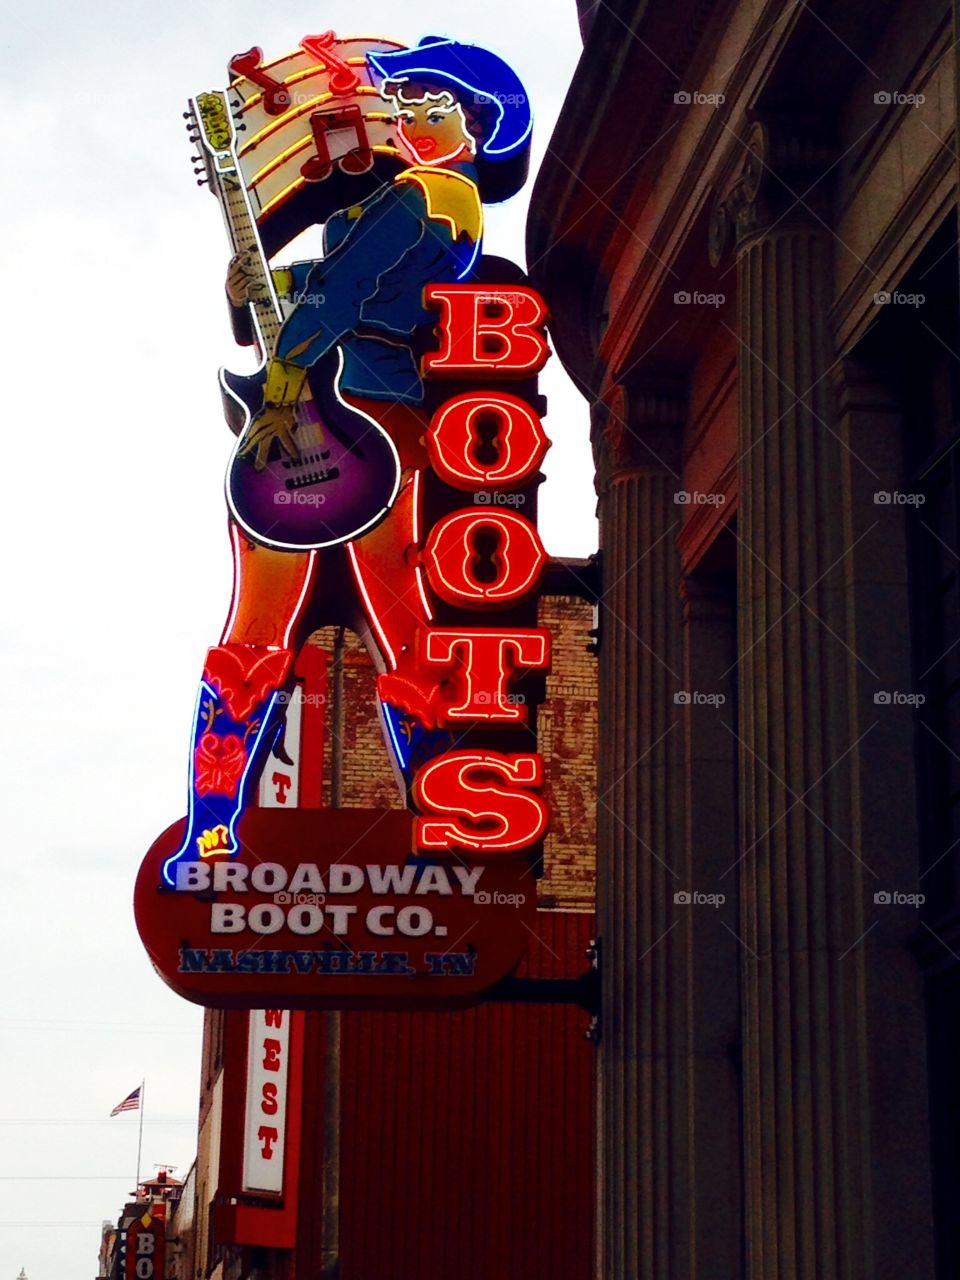 Nashville boots